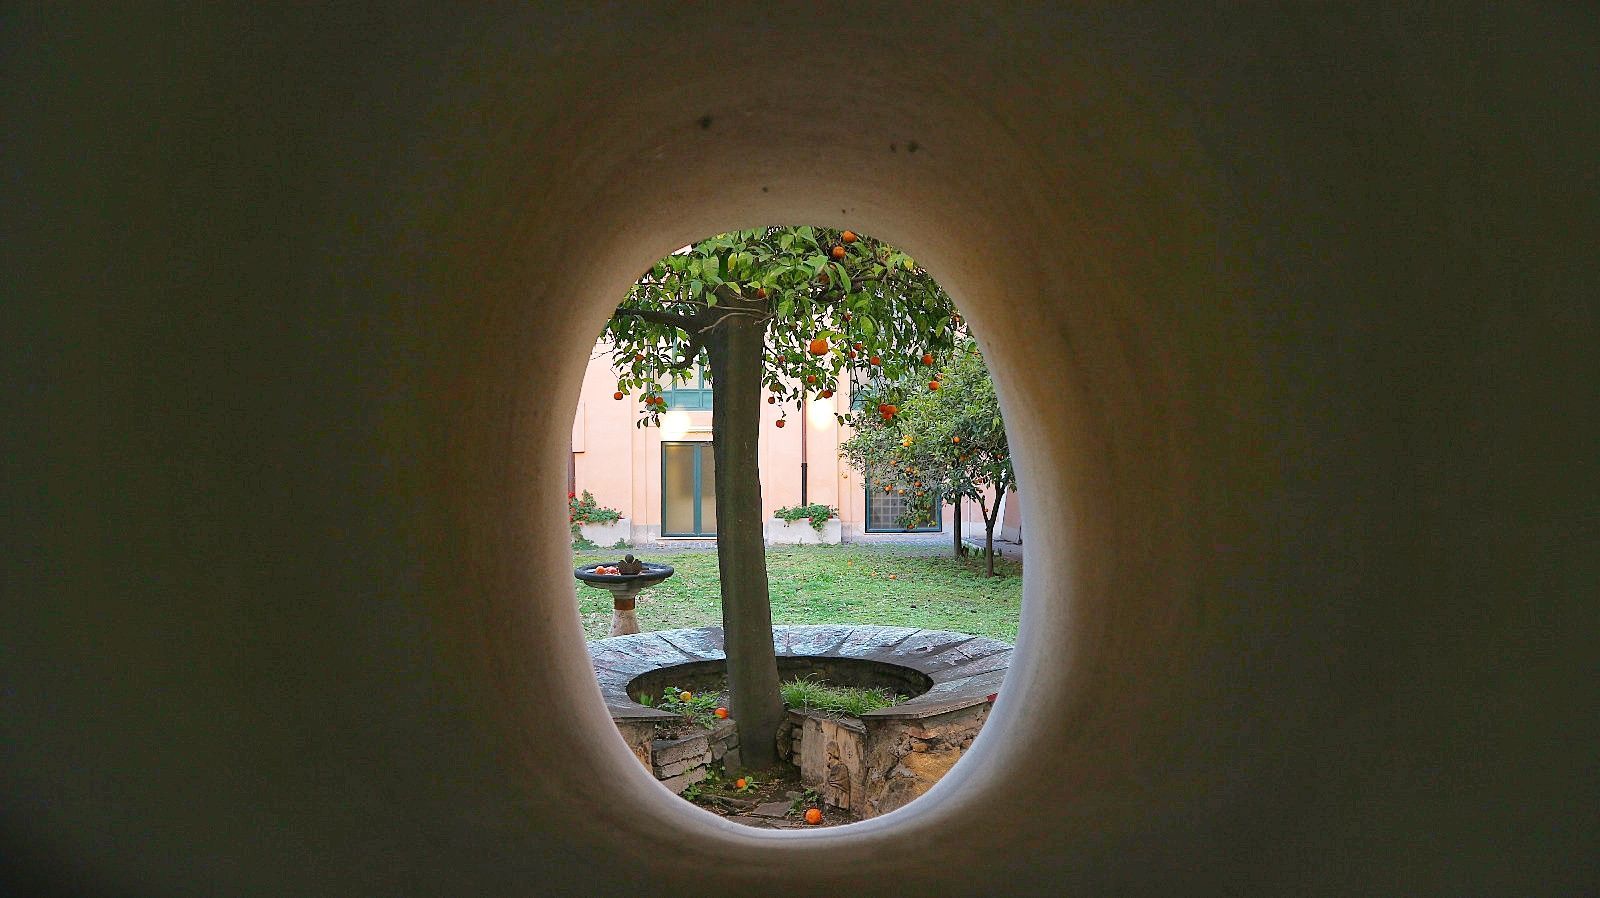 Magical Tree - Orange Garden (Roma) - by destinazioneterra.com